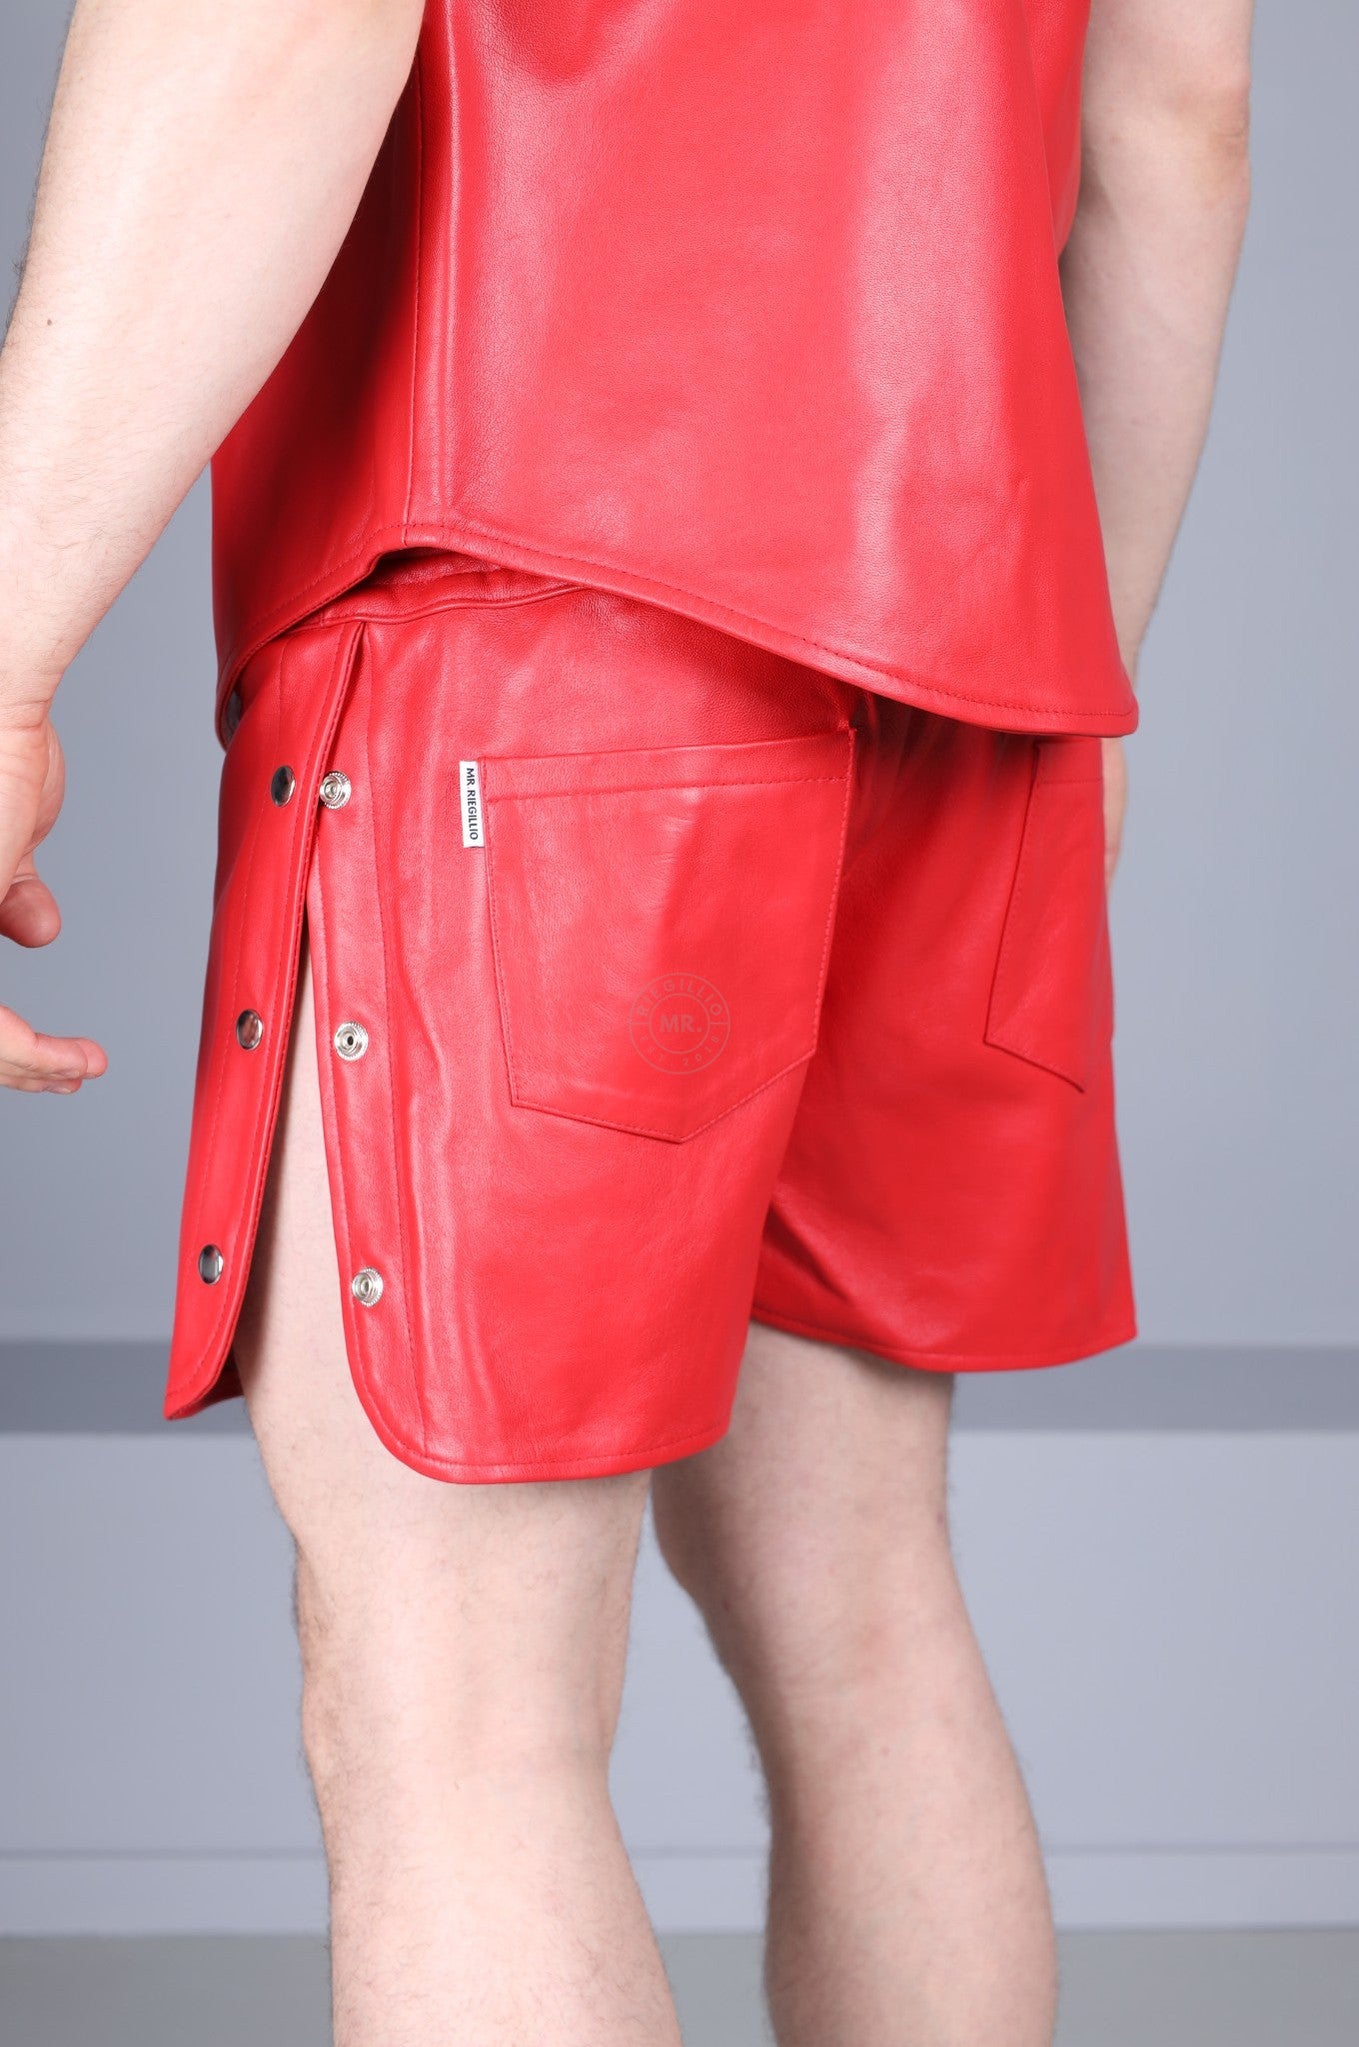 Red Leather Snap Short at MR. Riegillio